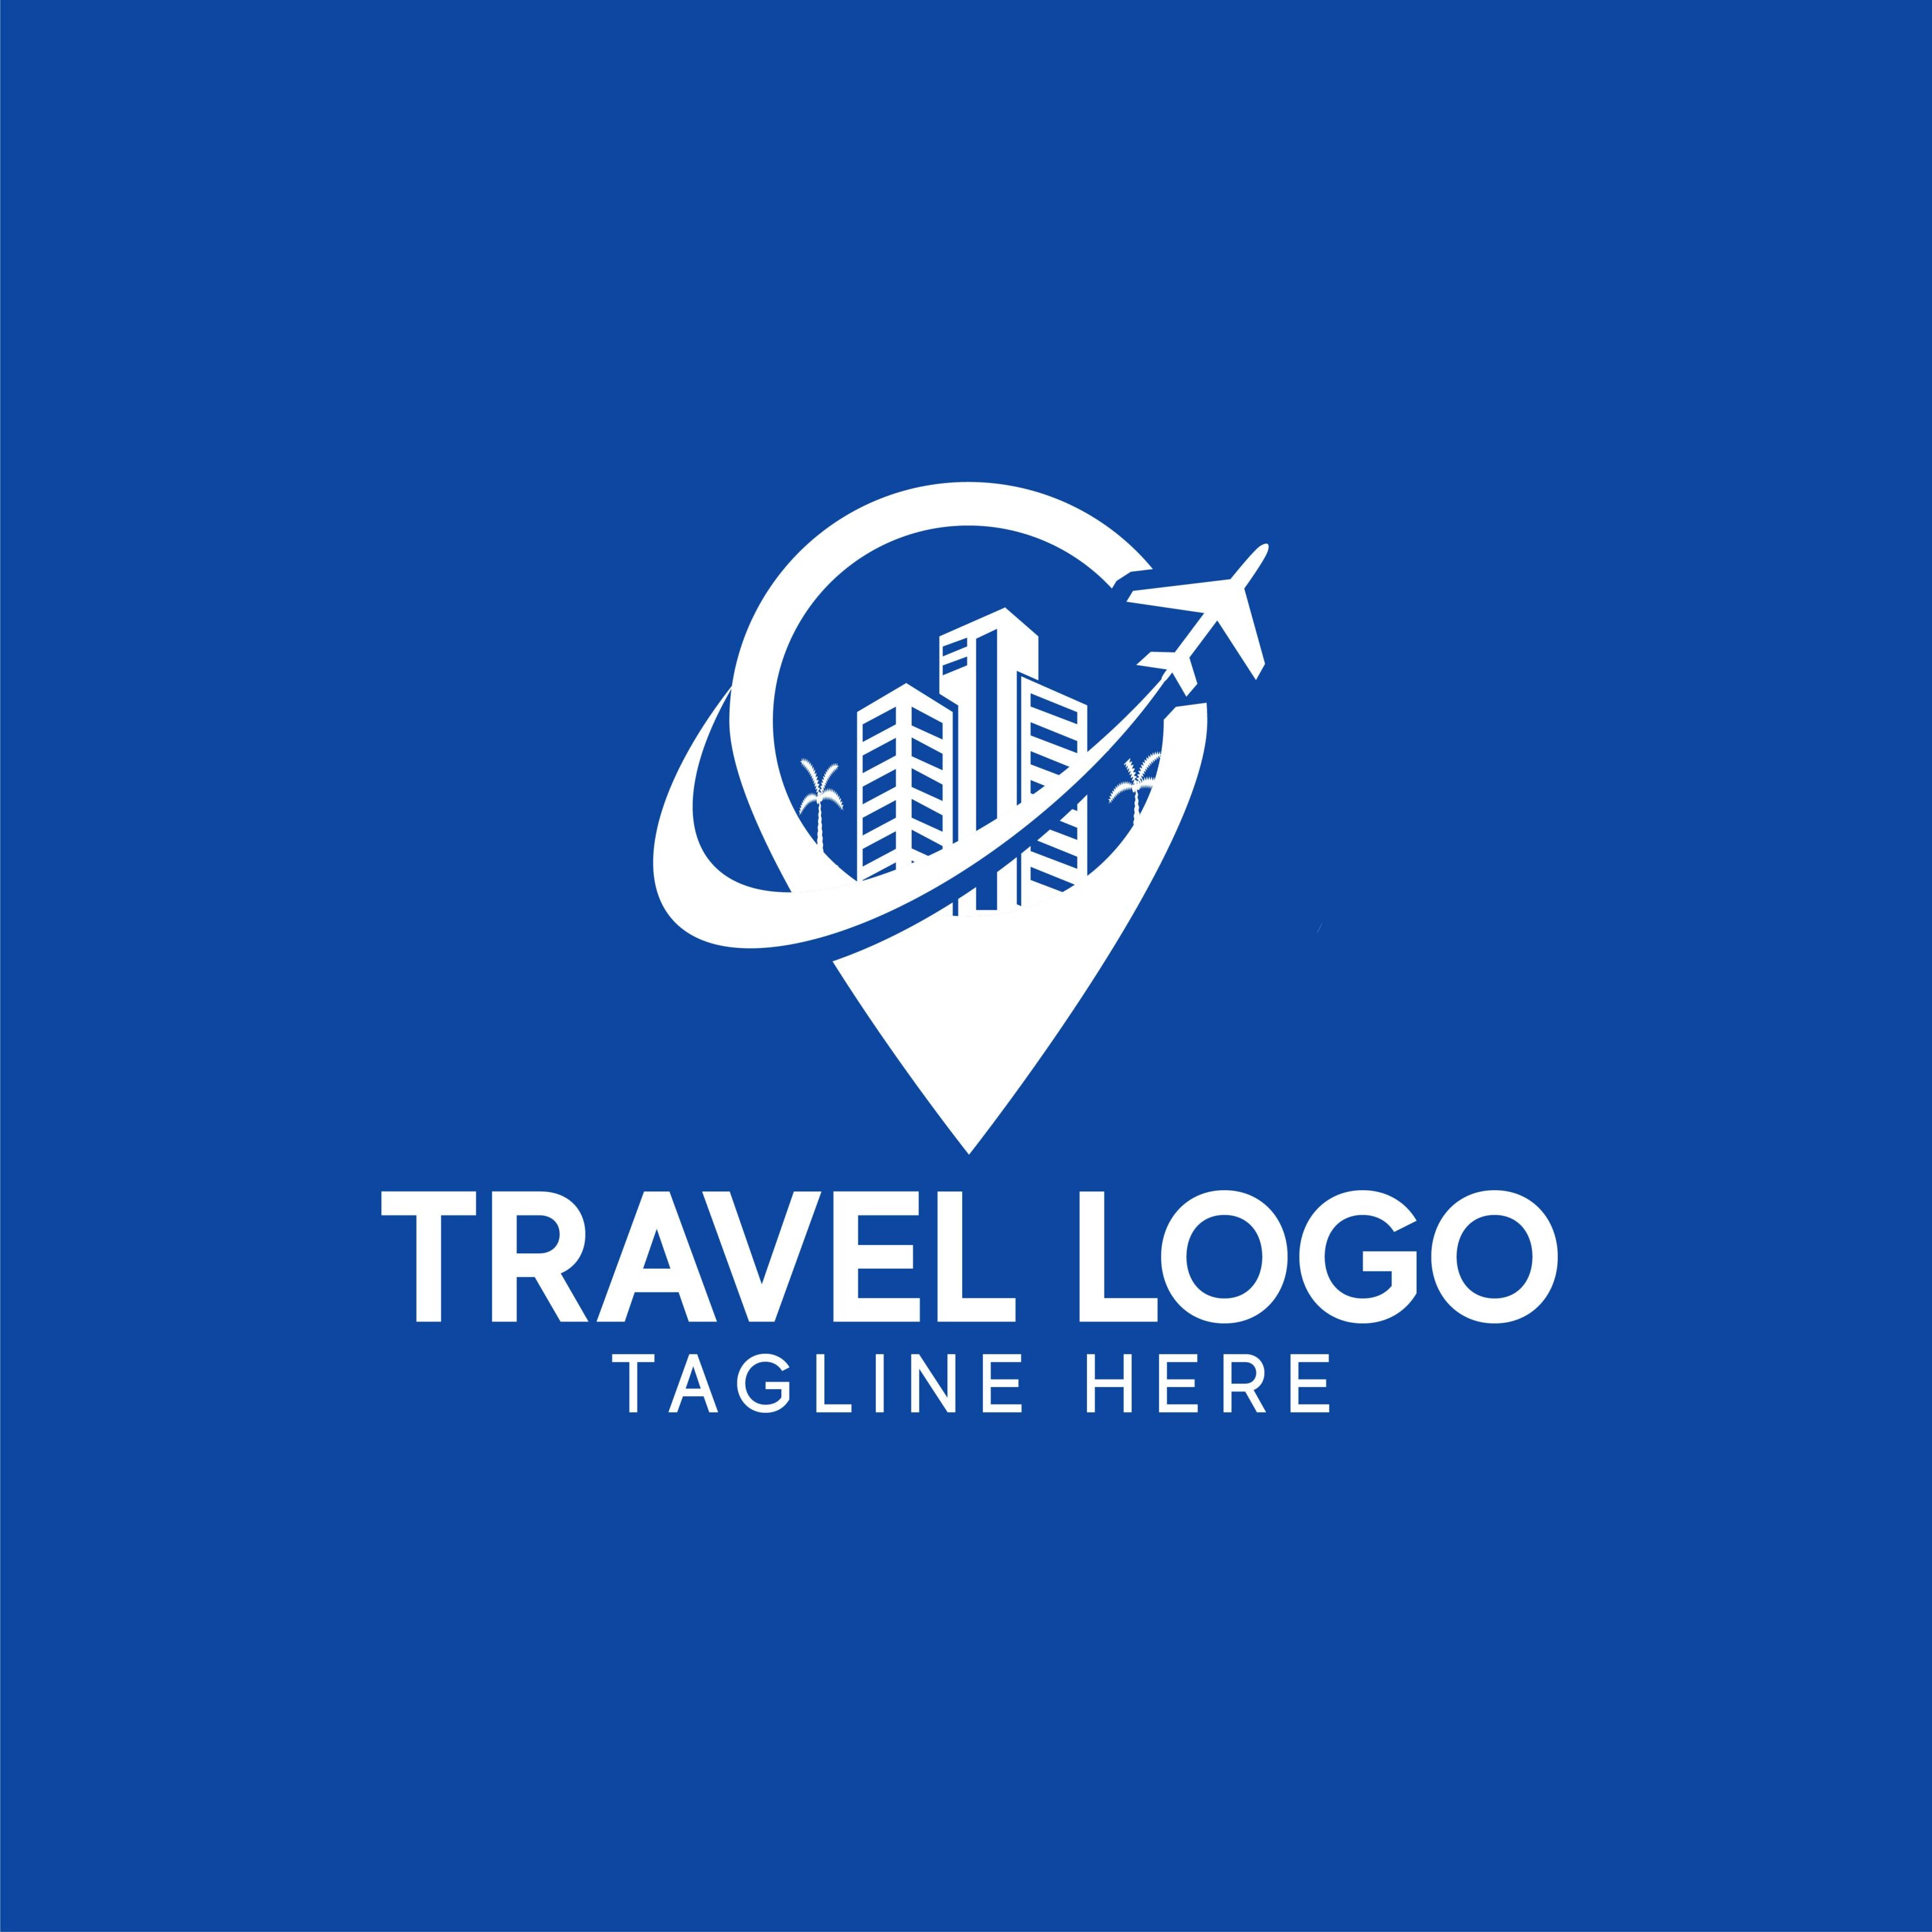 Travel Logo Design Editable AI File preview image.